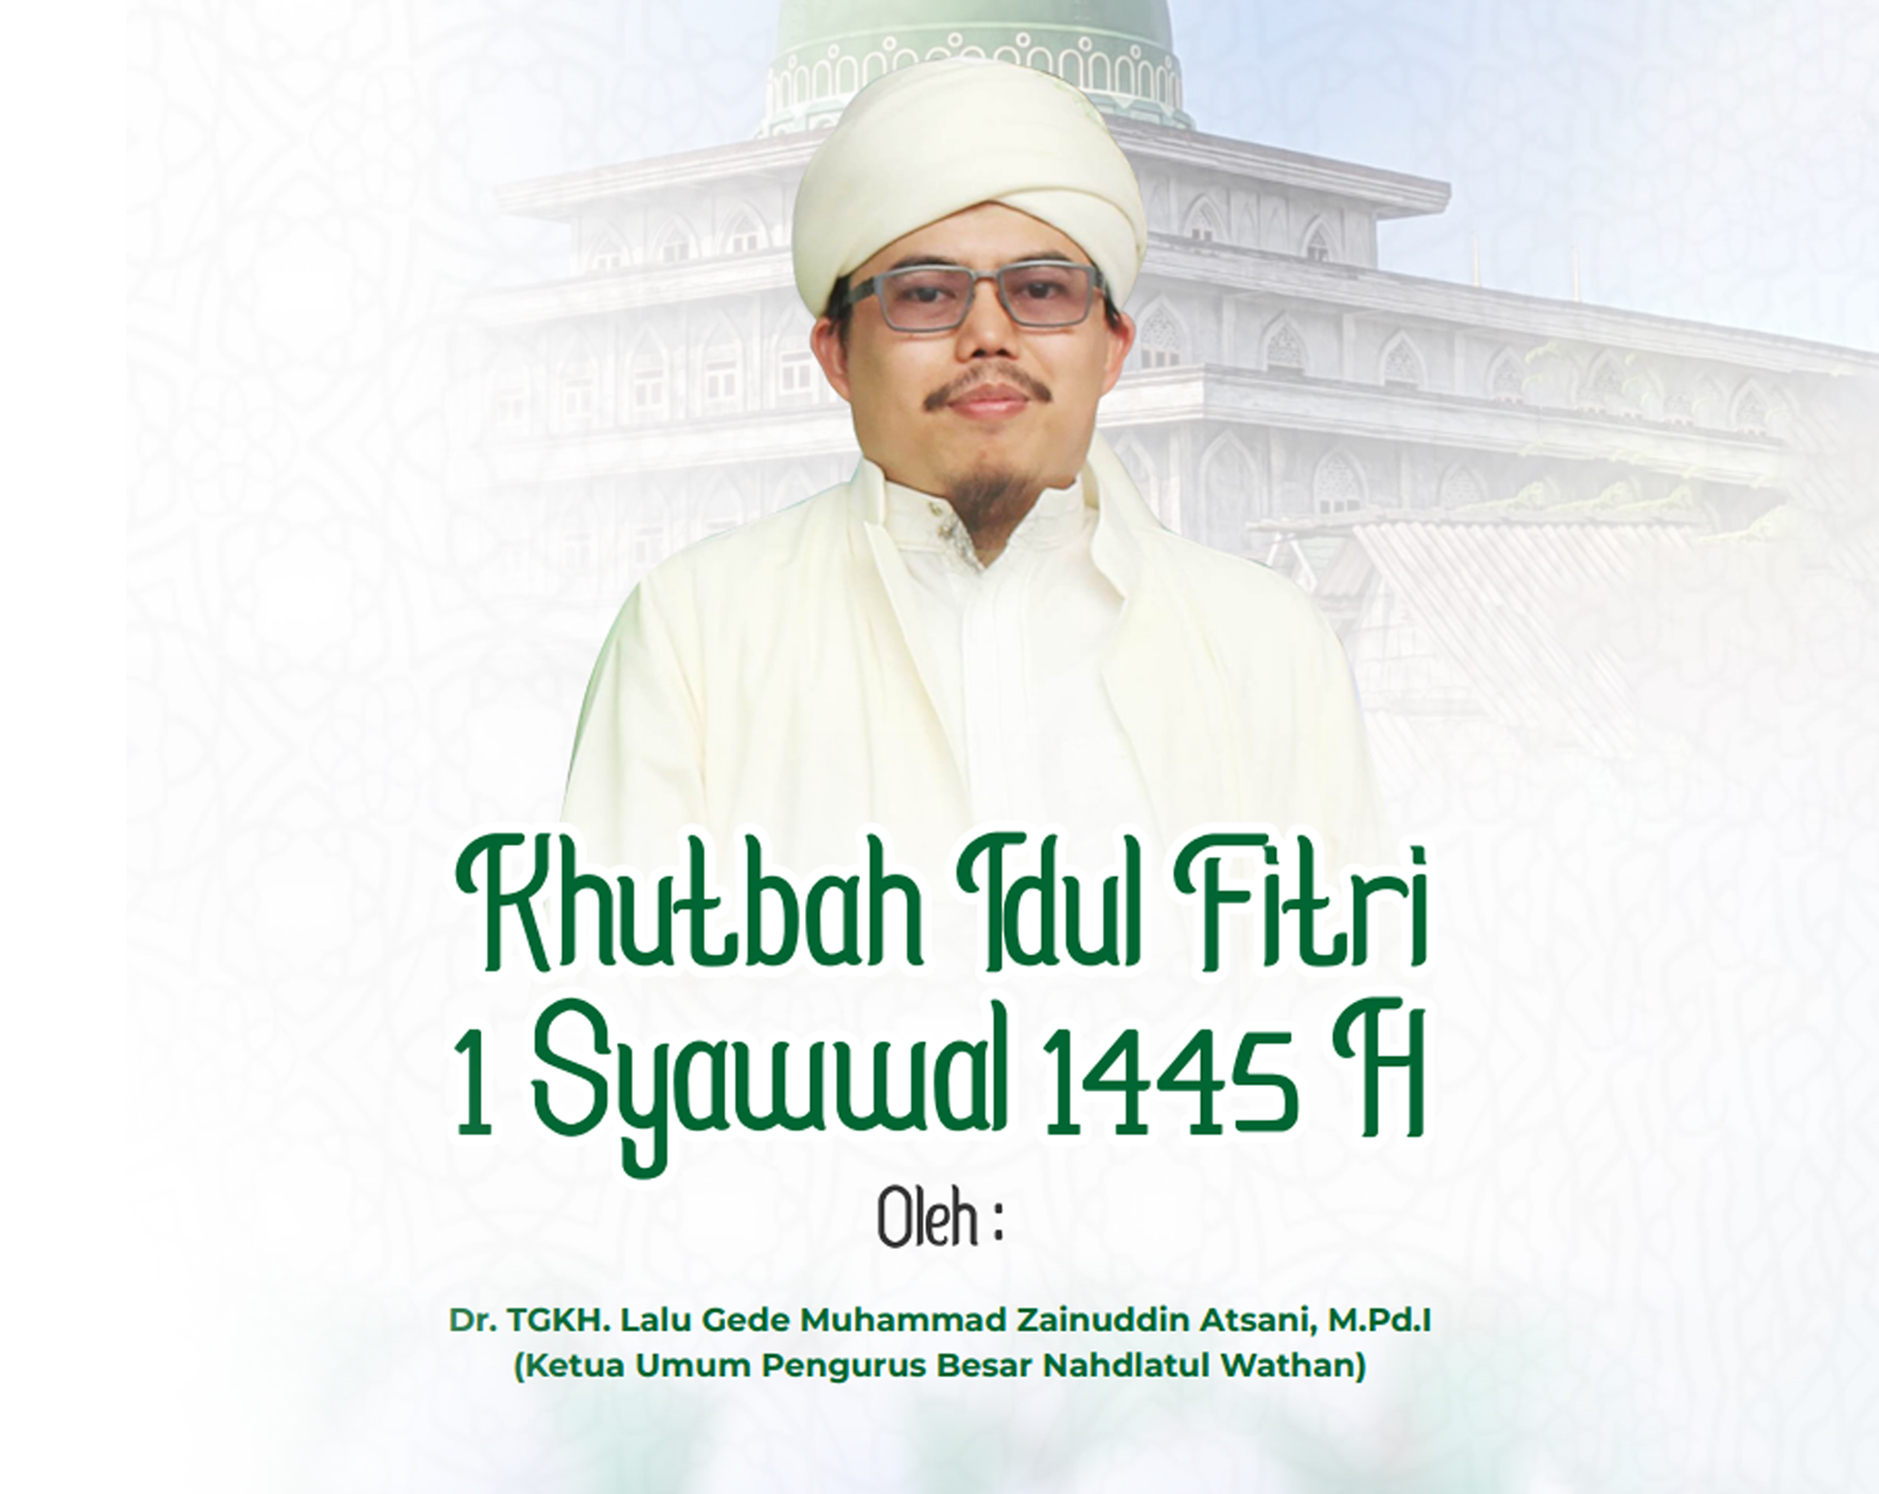 Khutbah Idul Fitri 1445 H, oleh Dr. TGKH L. Gede Muhammad Zainuddin Atsani (Ketum PBNW)